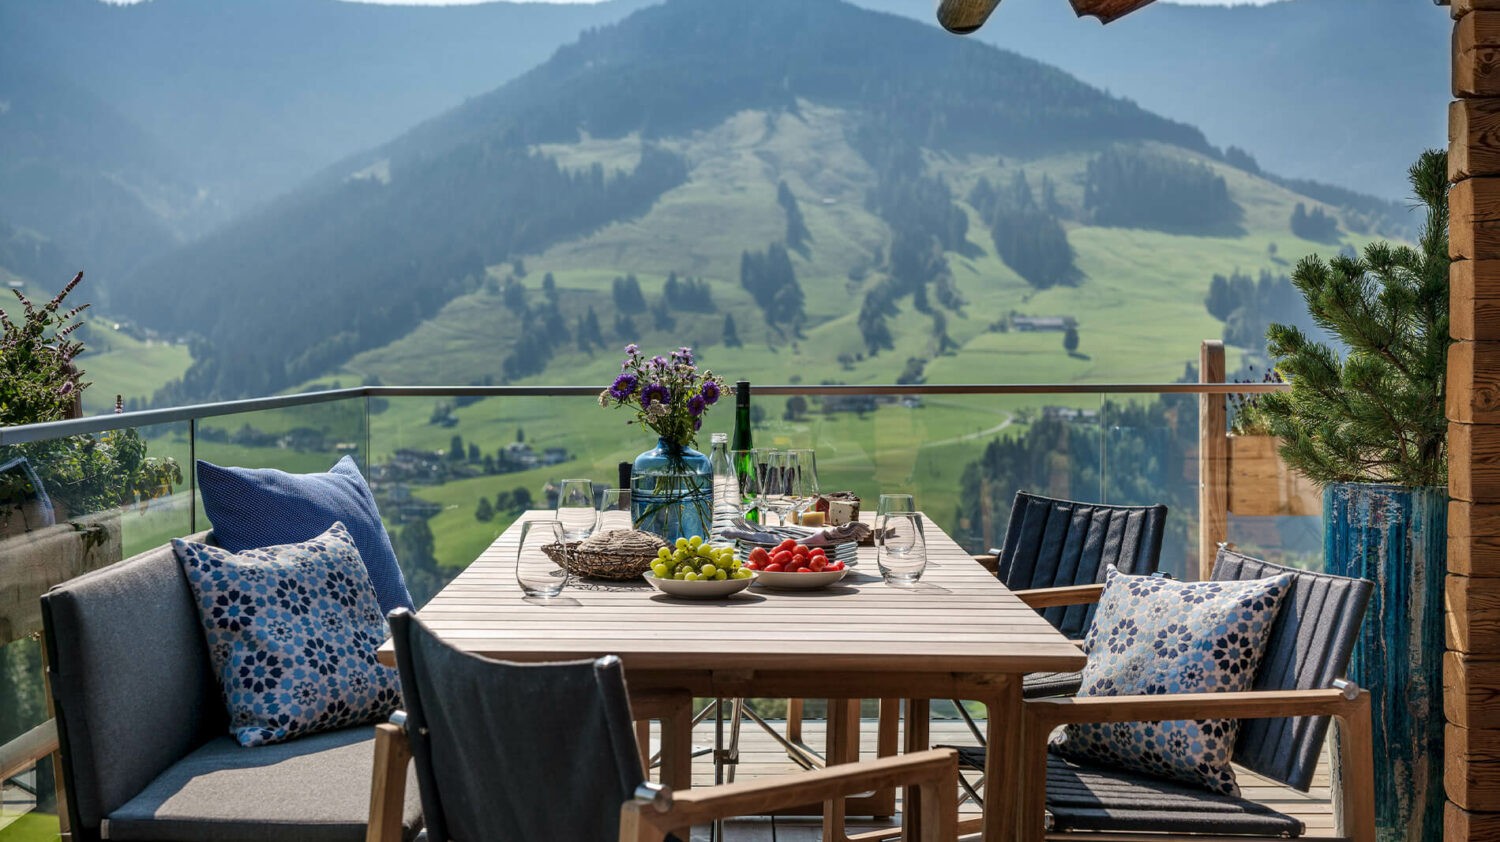 Senhoog_Gipfelkreuzliebe-sun-terrace-lunch